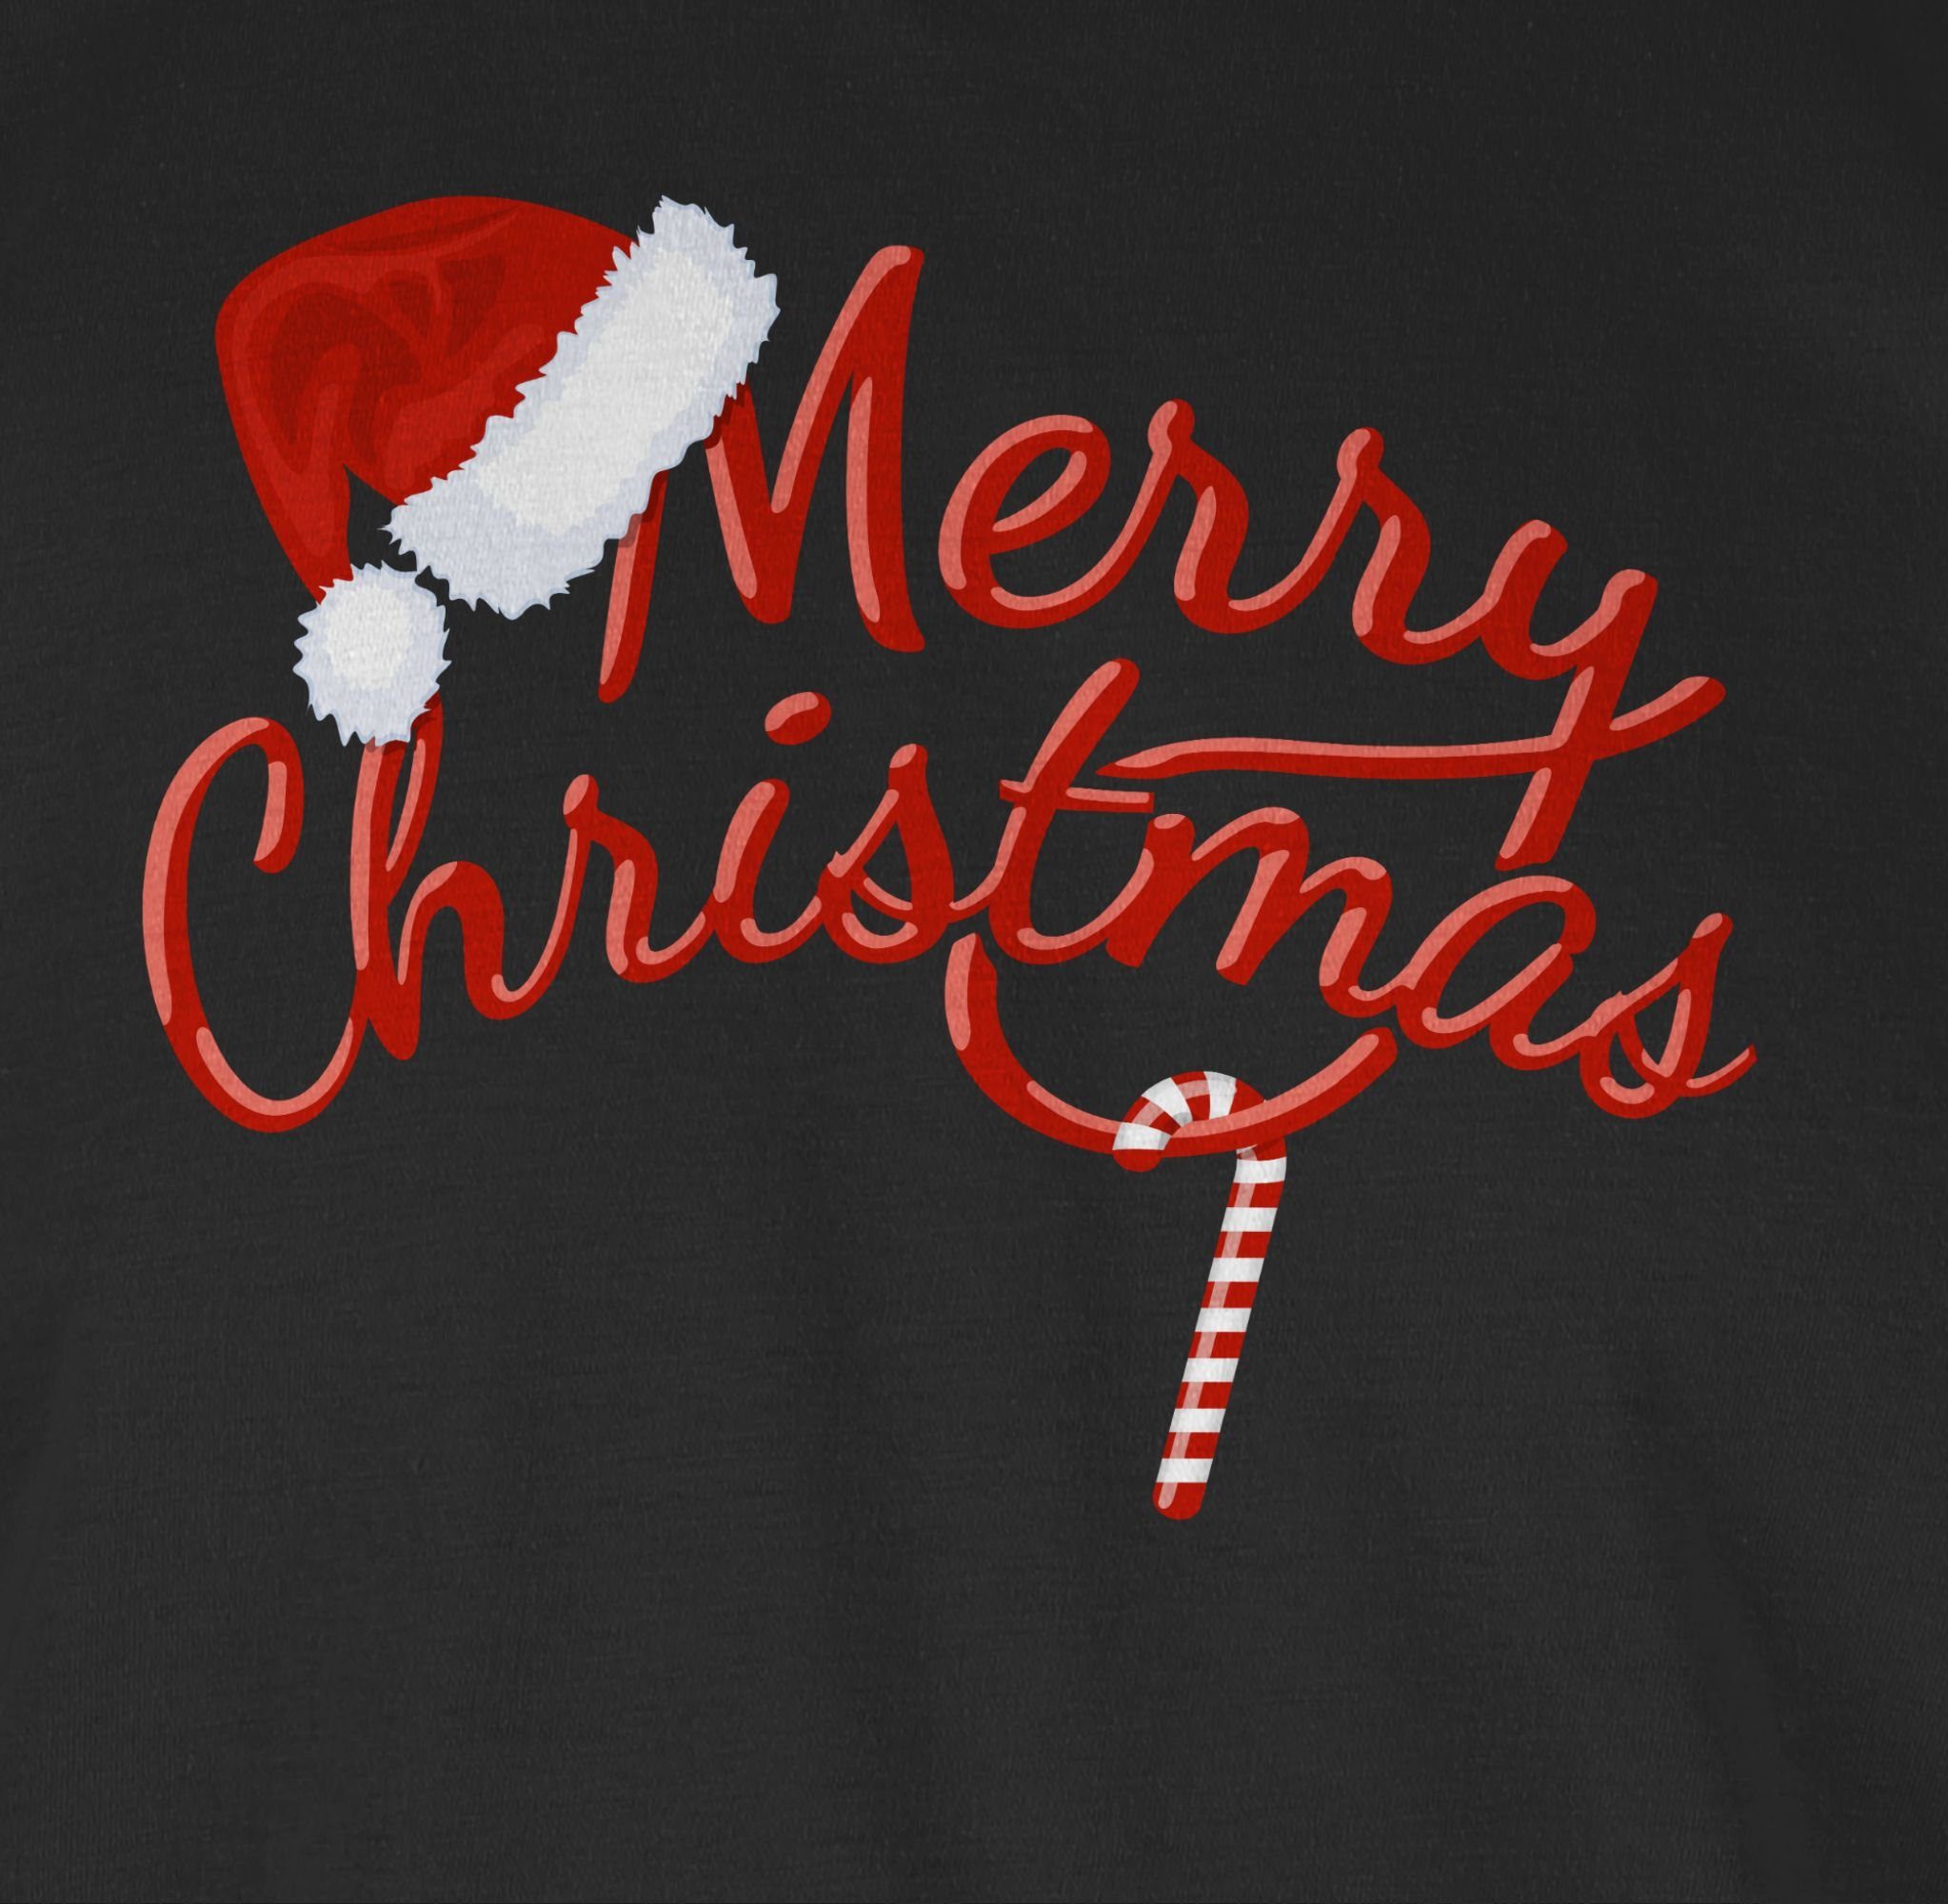 Shirtracer T-Shirt Merry Kleidung Schwarz Christmas 01 Zuckerstange Weihachten